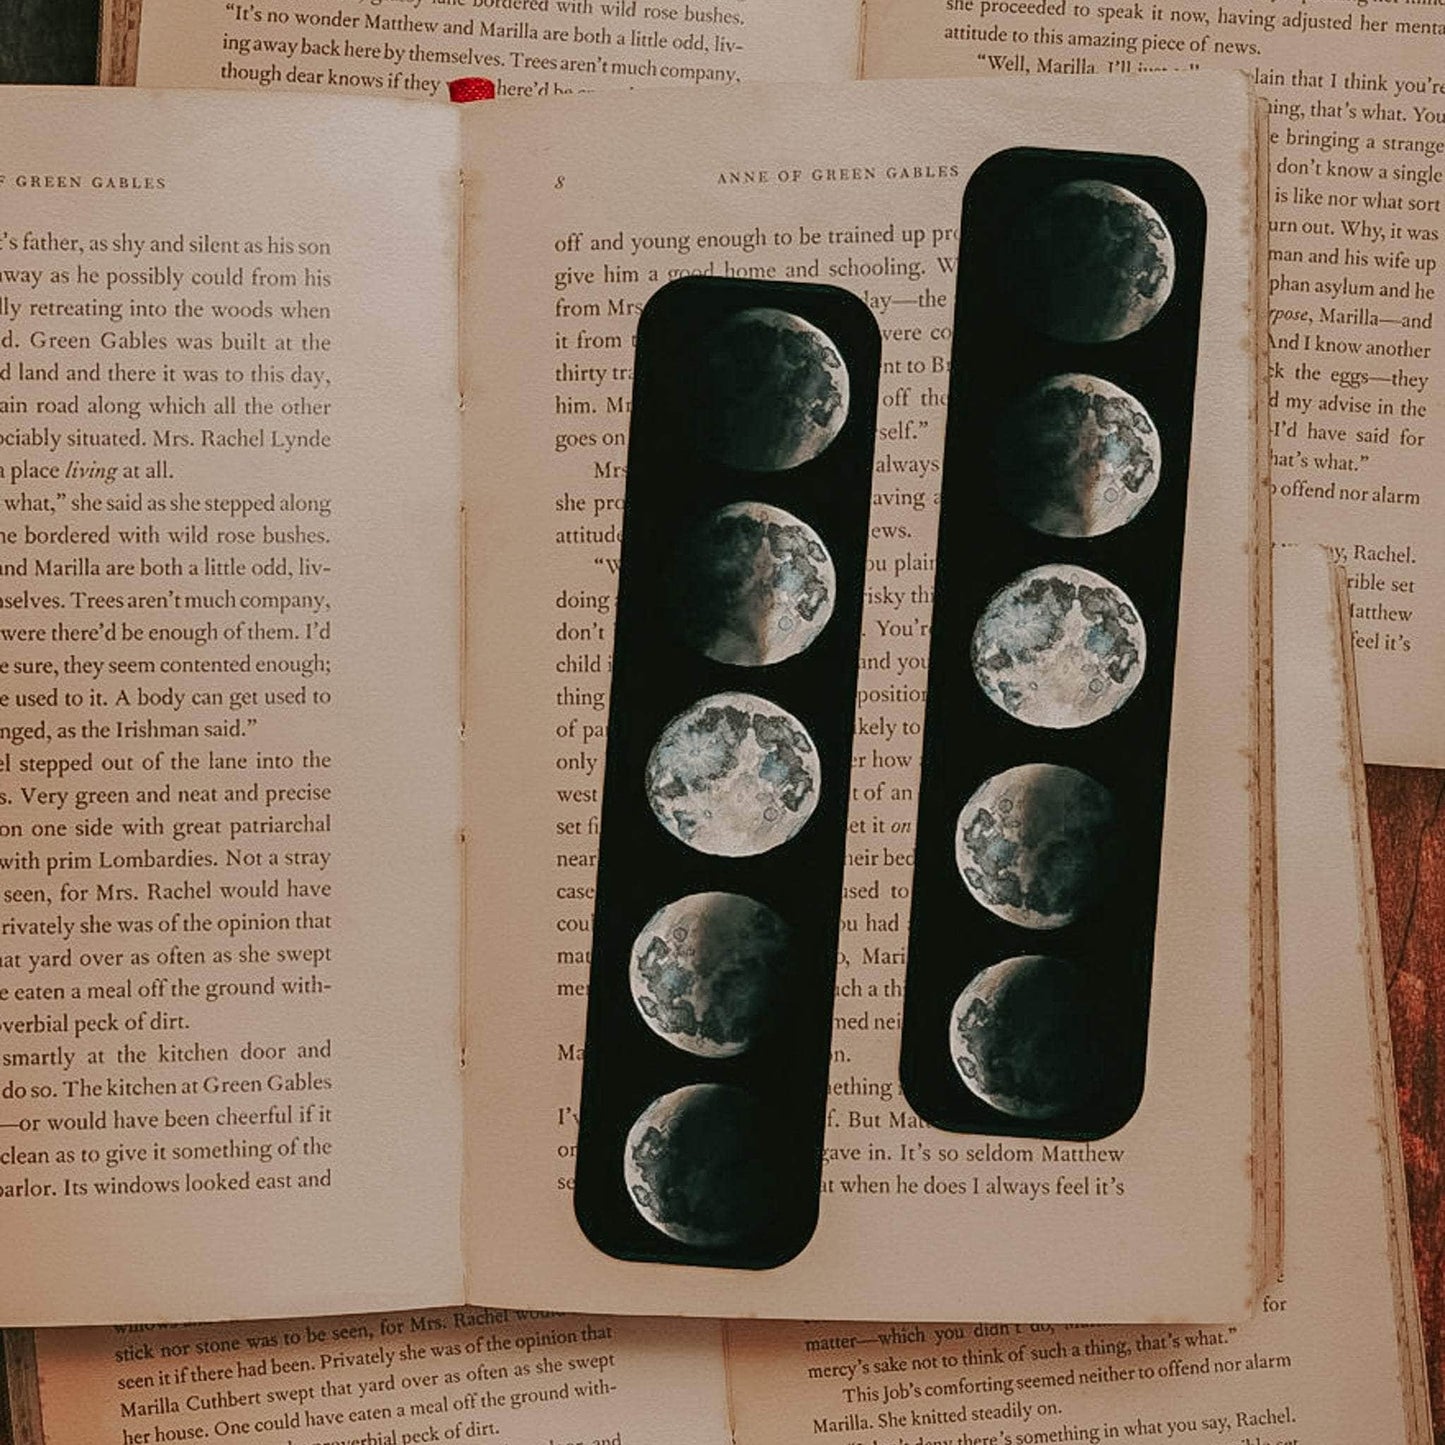 Moon Phase Bookmark